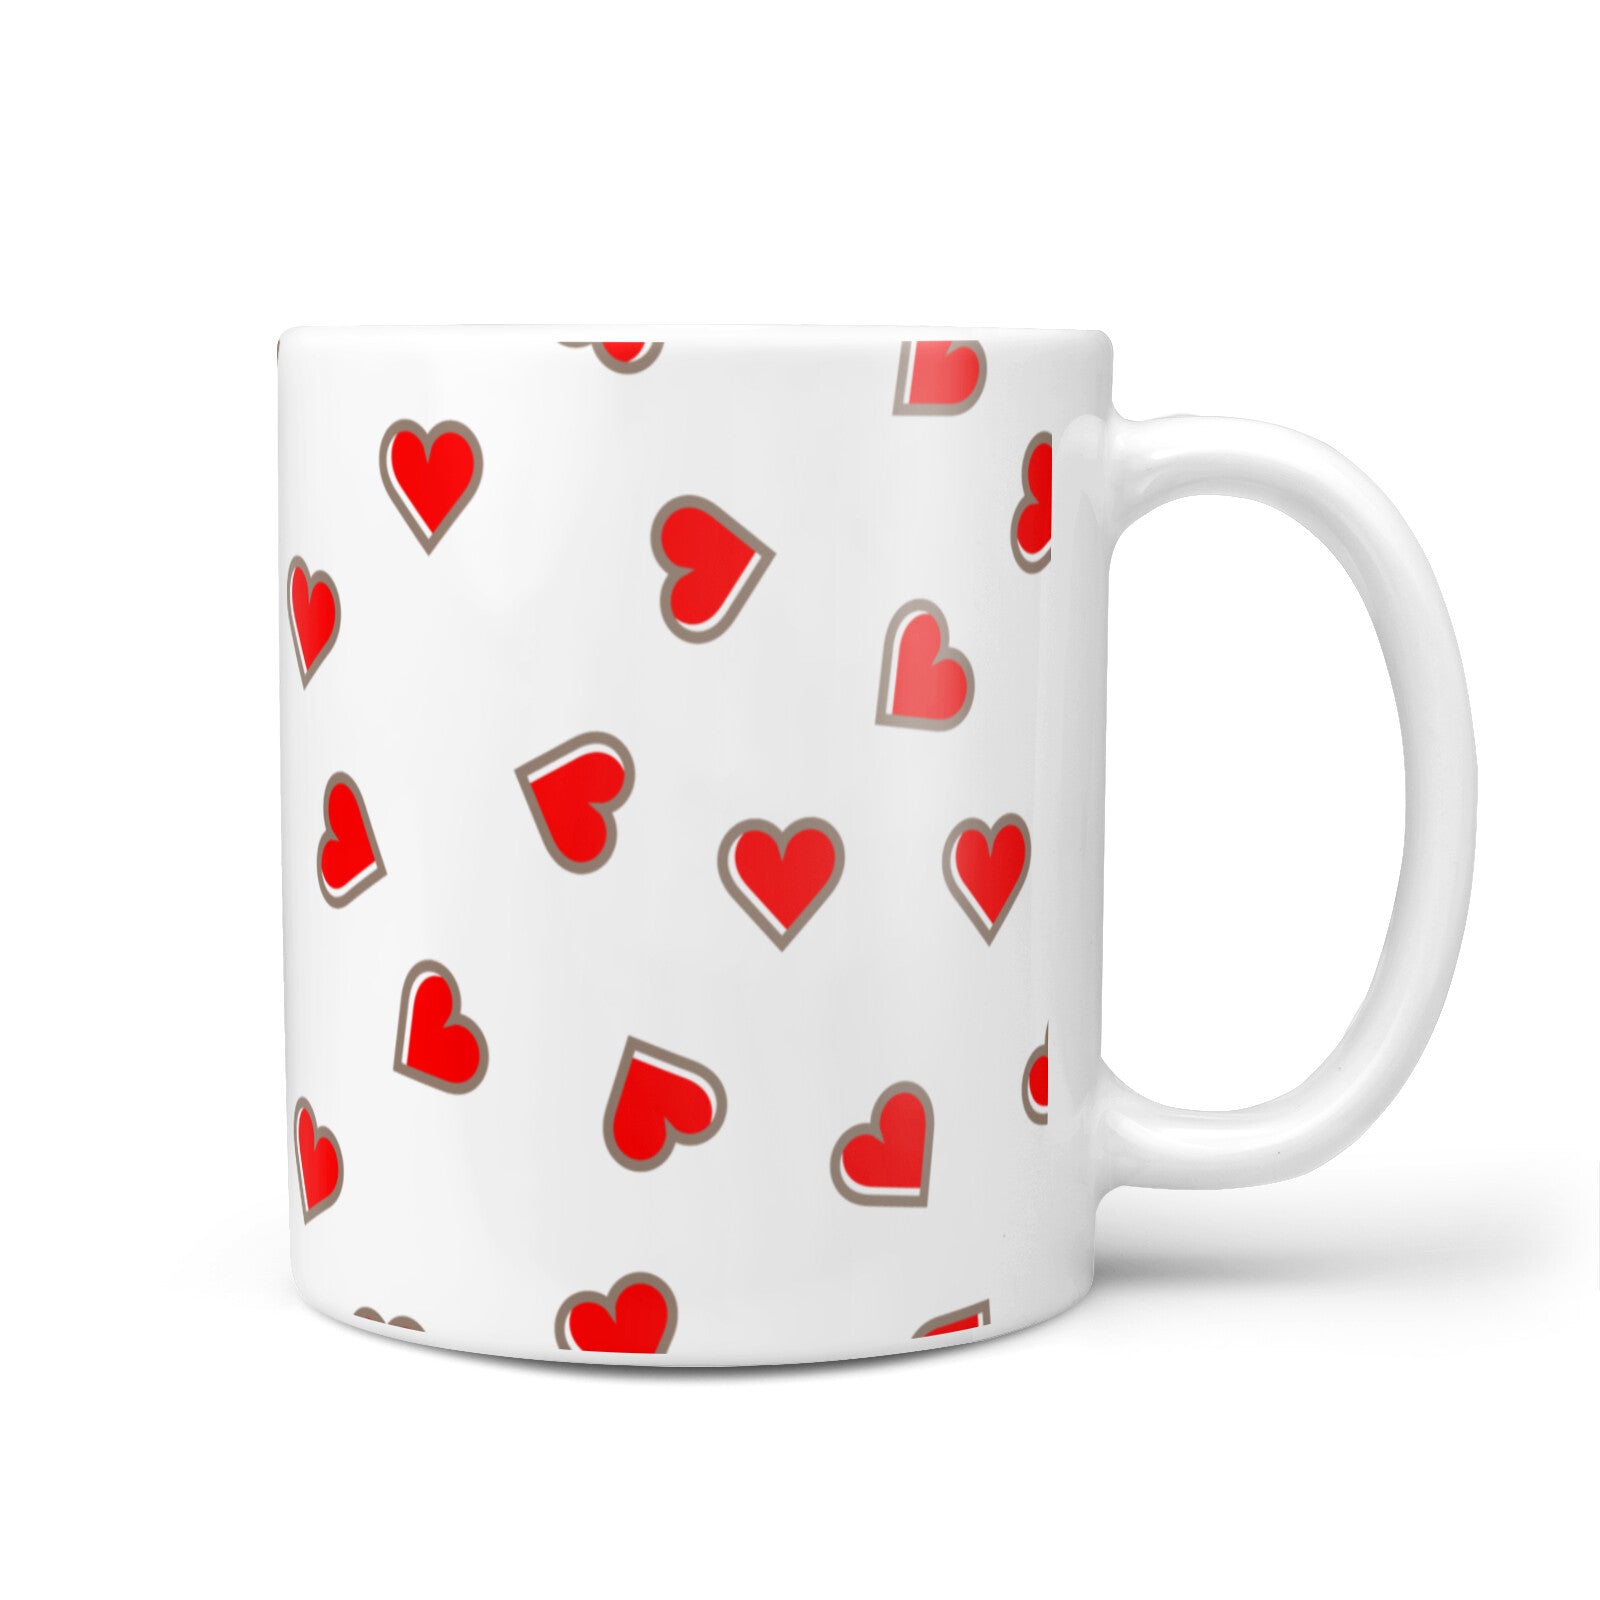 Cute Red Hearts 10oz Mug